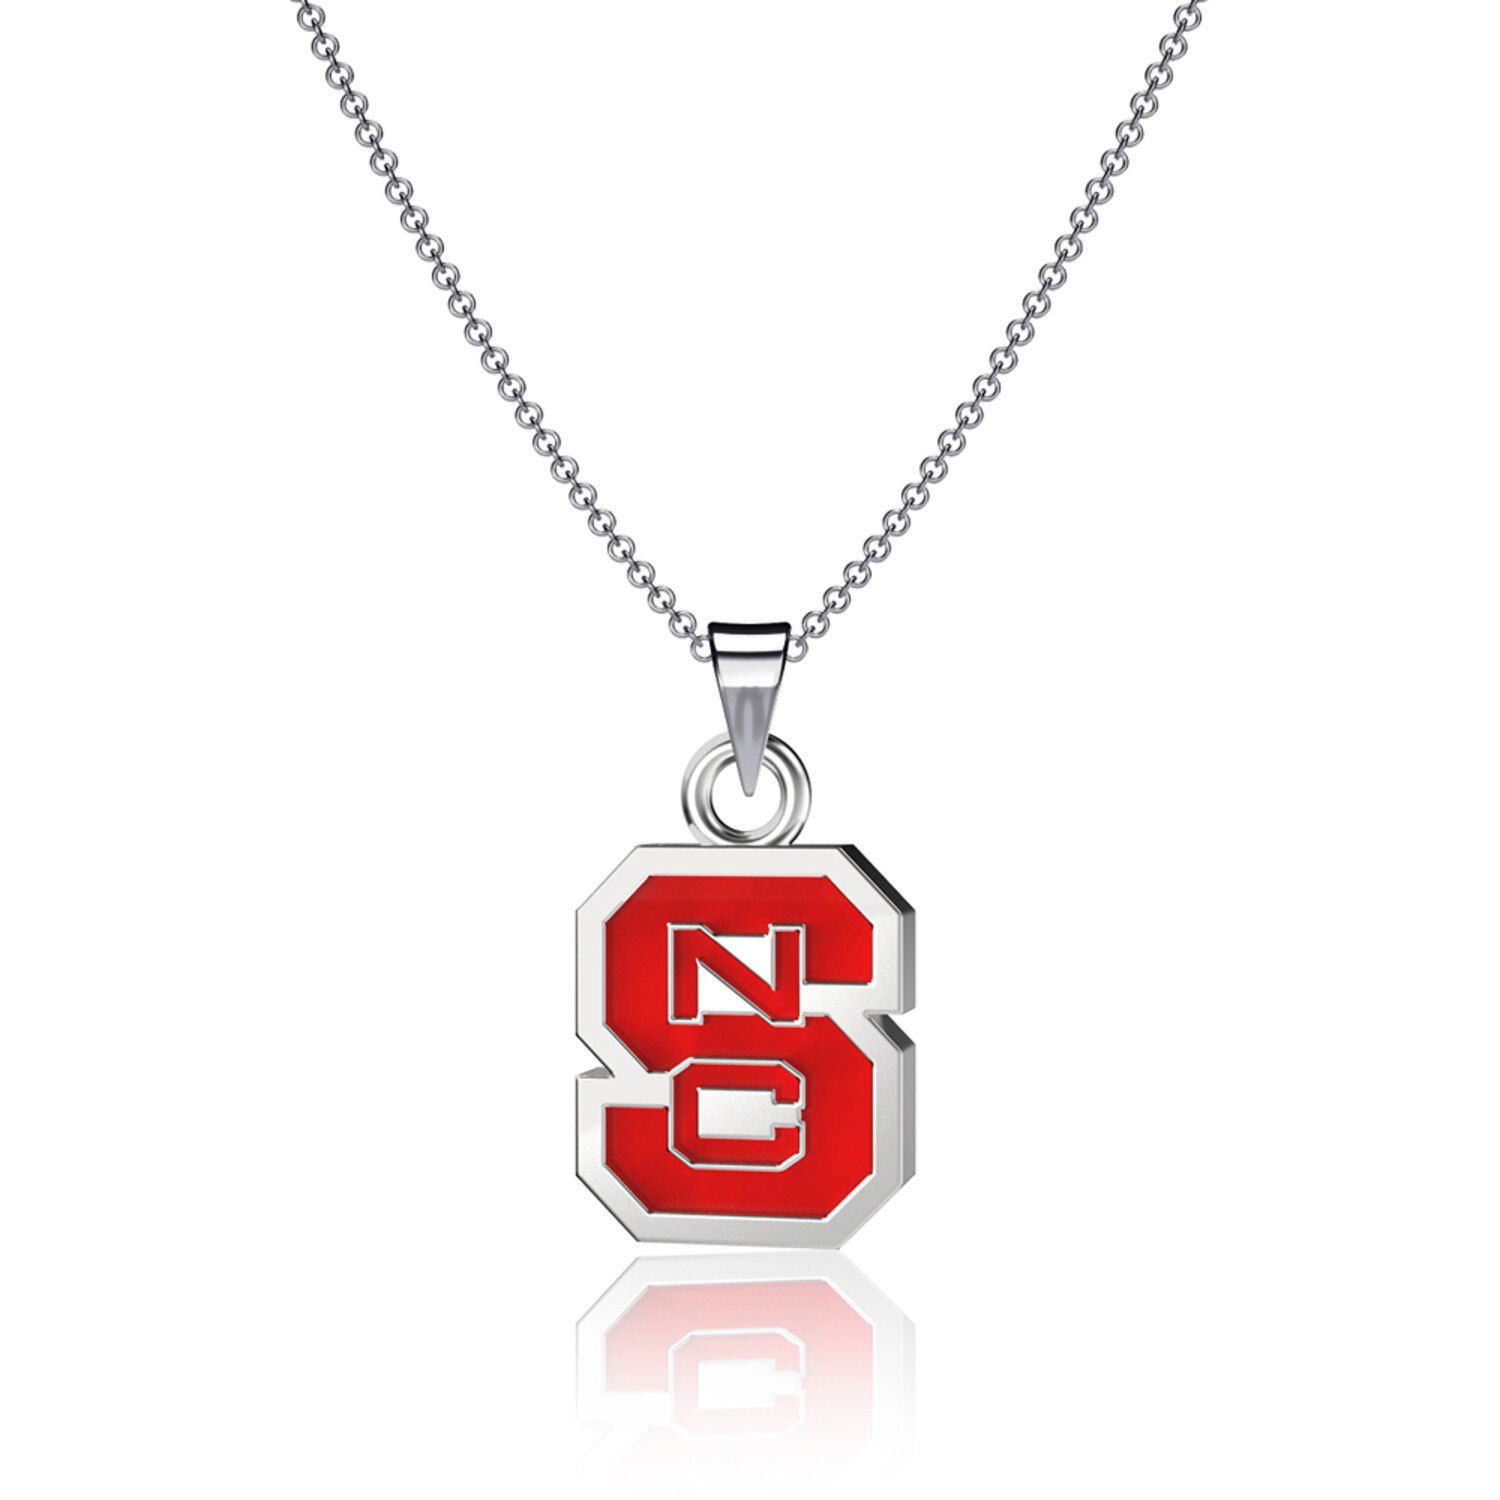 Image for Unbranded Dayna Designs NC State Wolfpack Enamel Pendant Necklace at Kohl's.